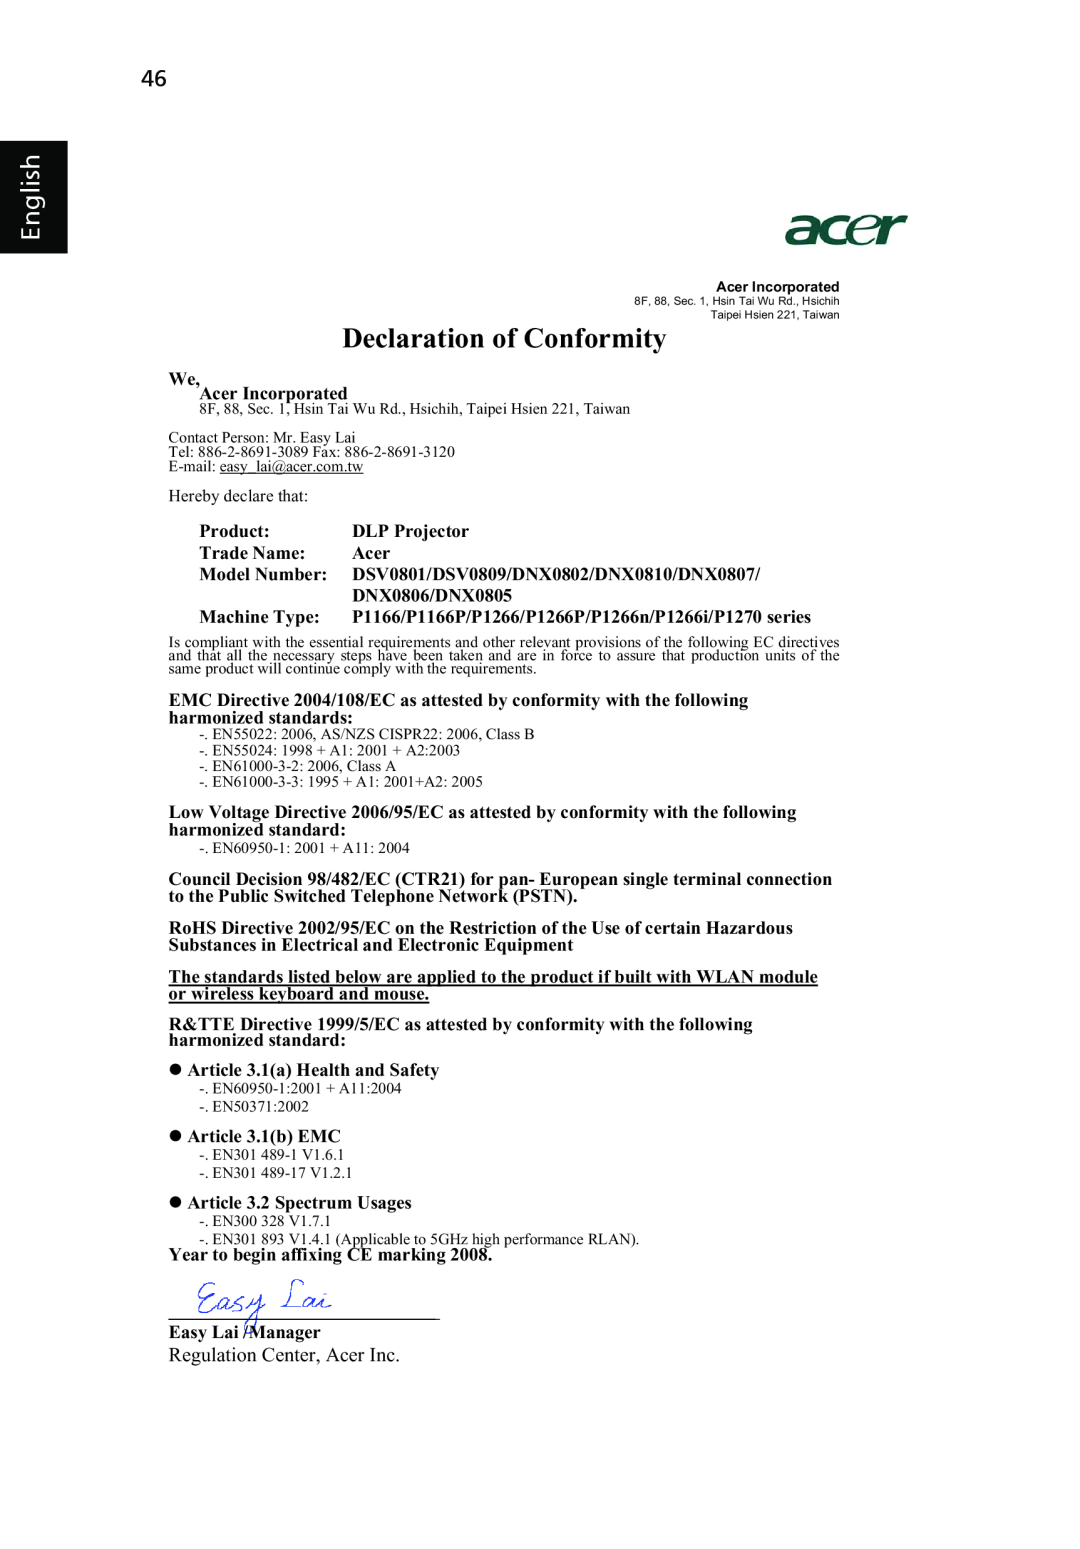 Acer P1266P, P1270, P1266i, P1266N, P1166P manual Declaration of Conformity, English 